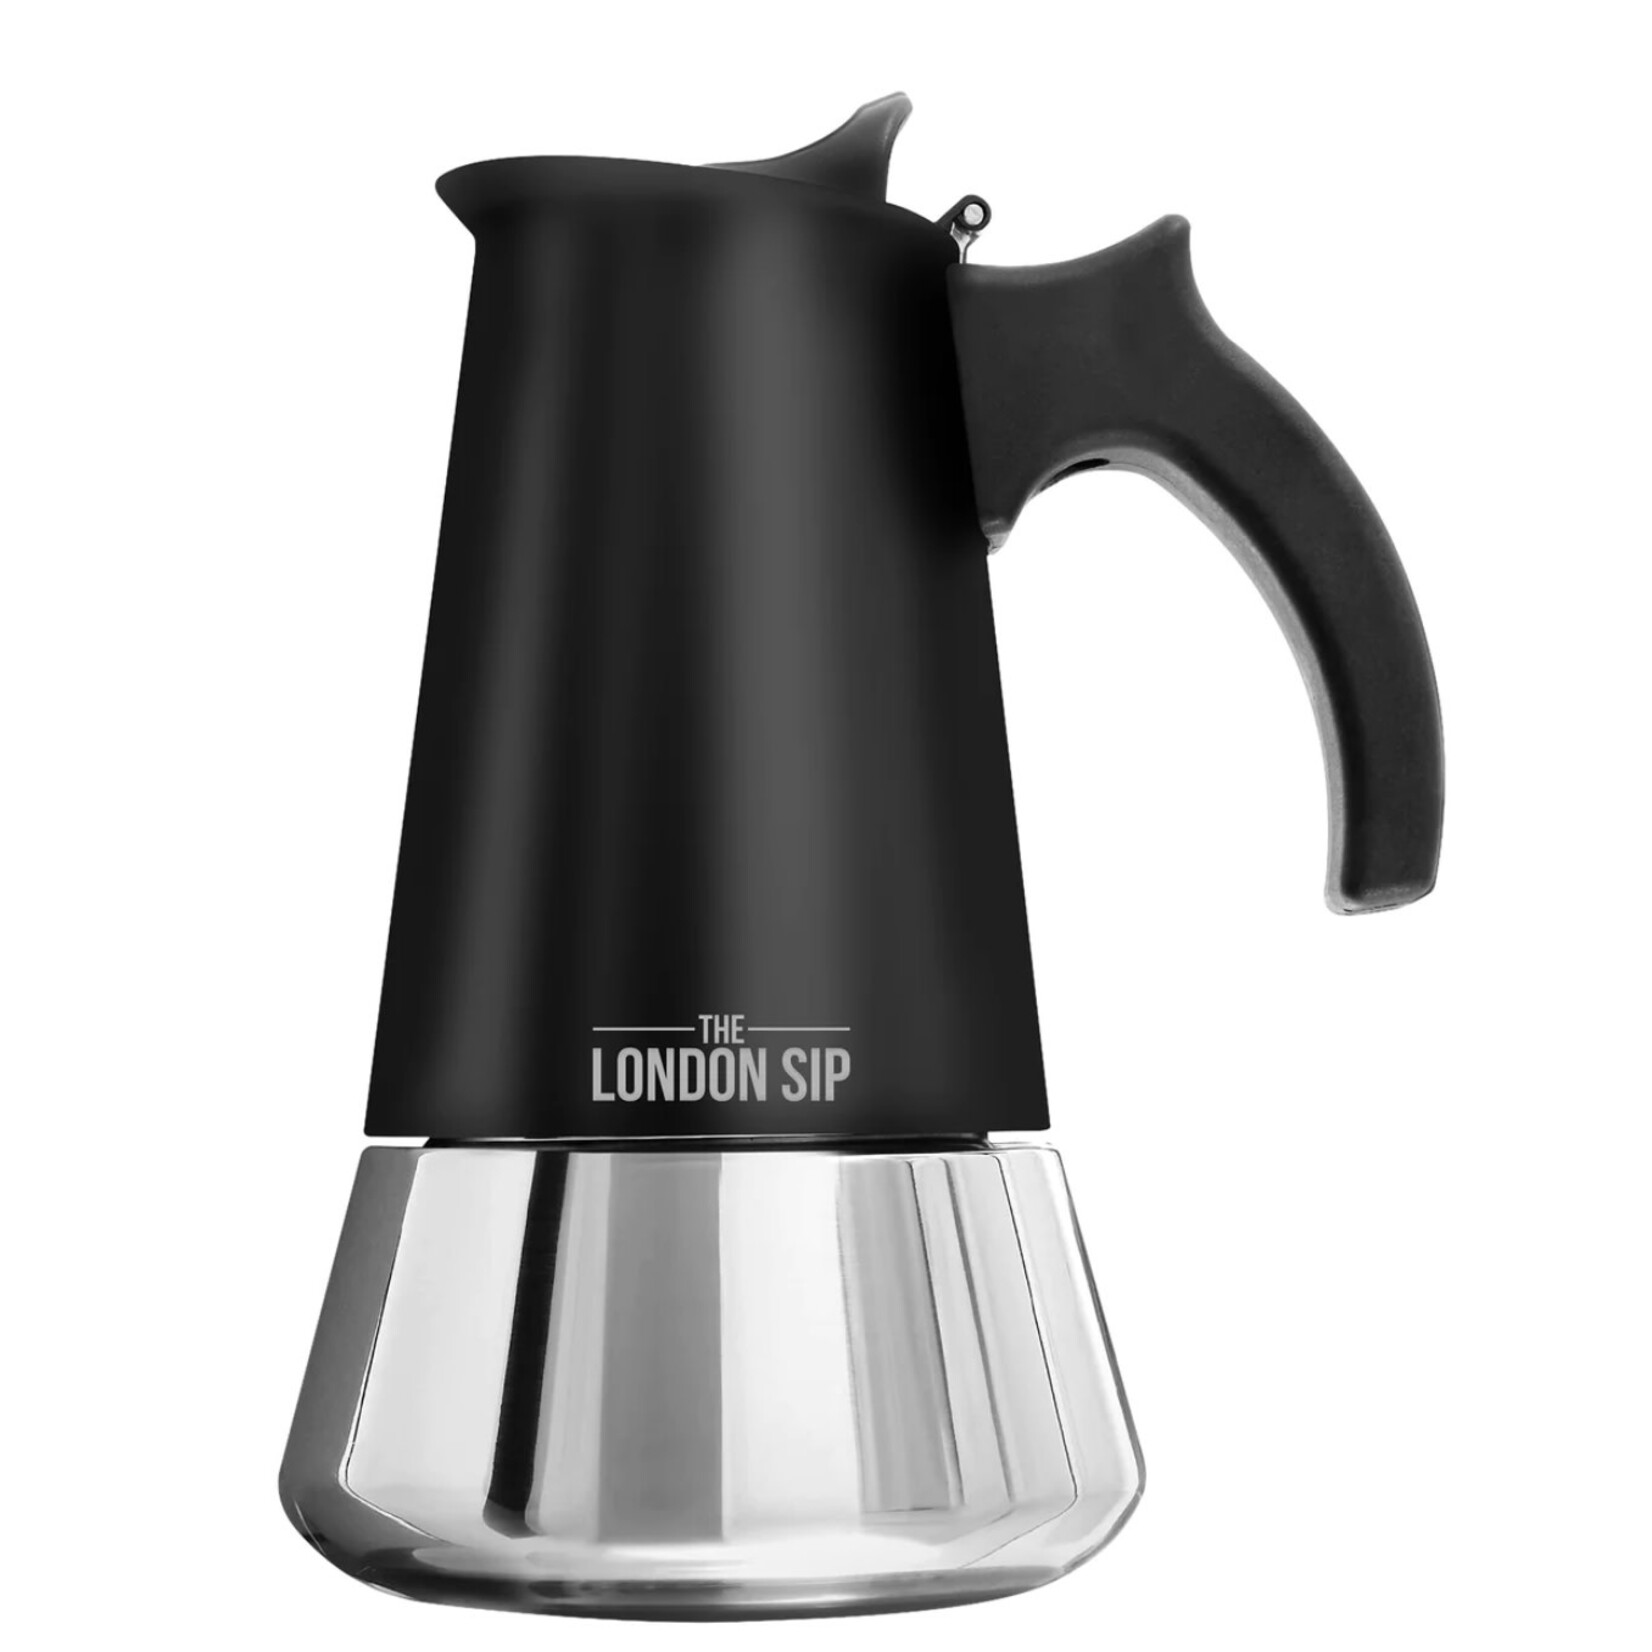 LONDON SIP LONDON SIP SS Espresso Maker 10cup- Black